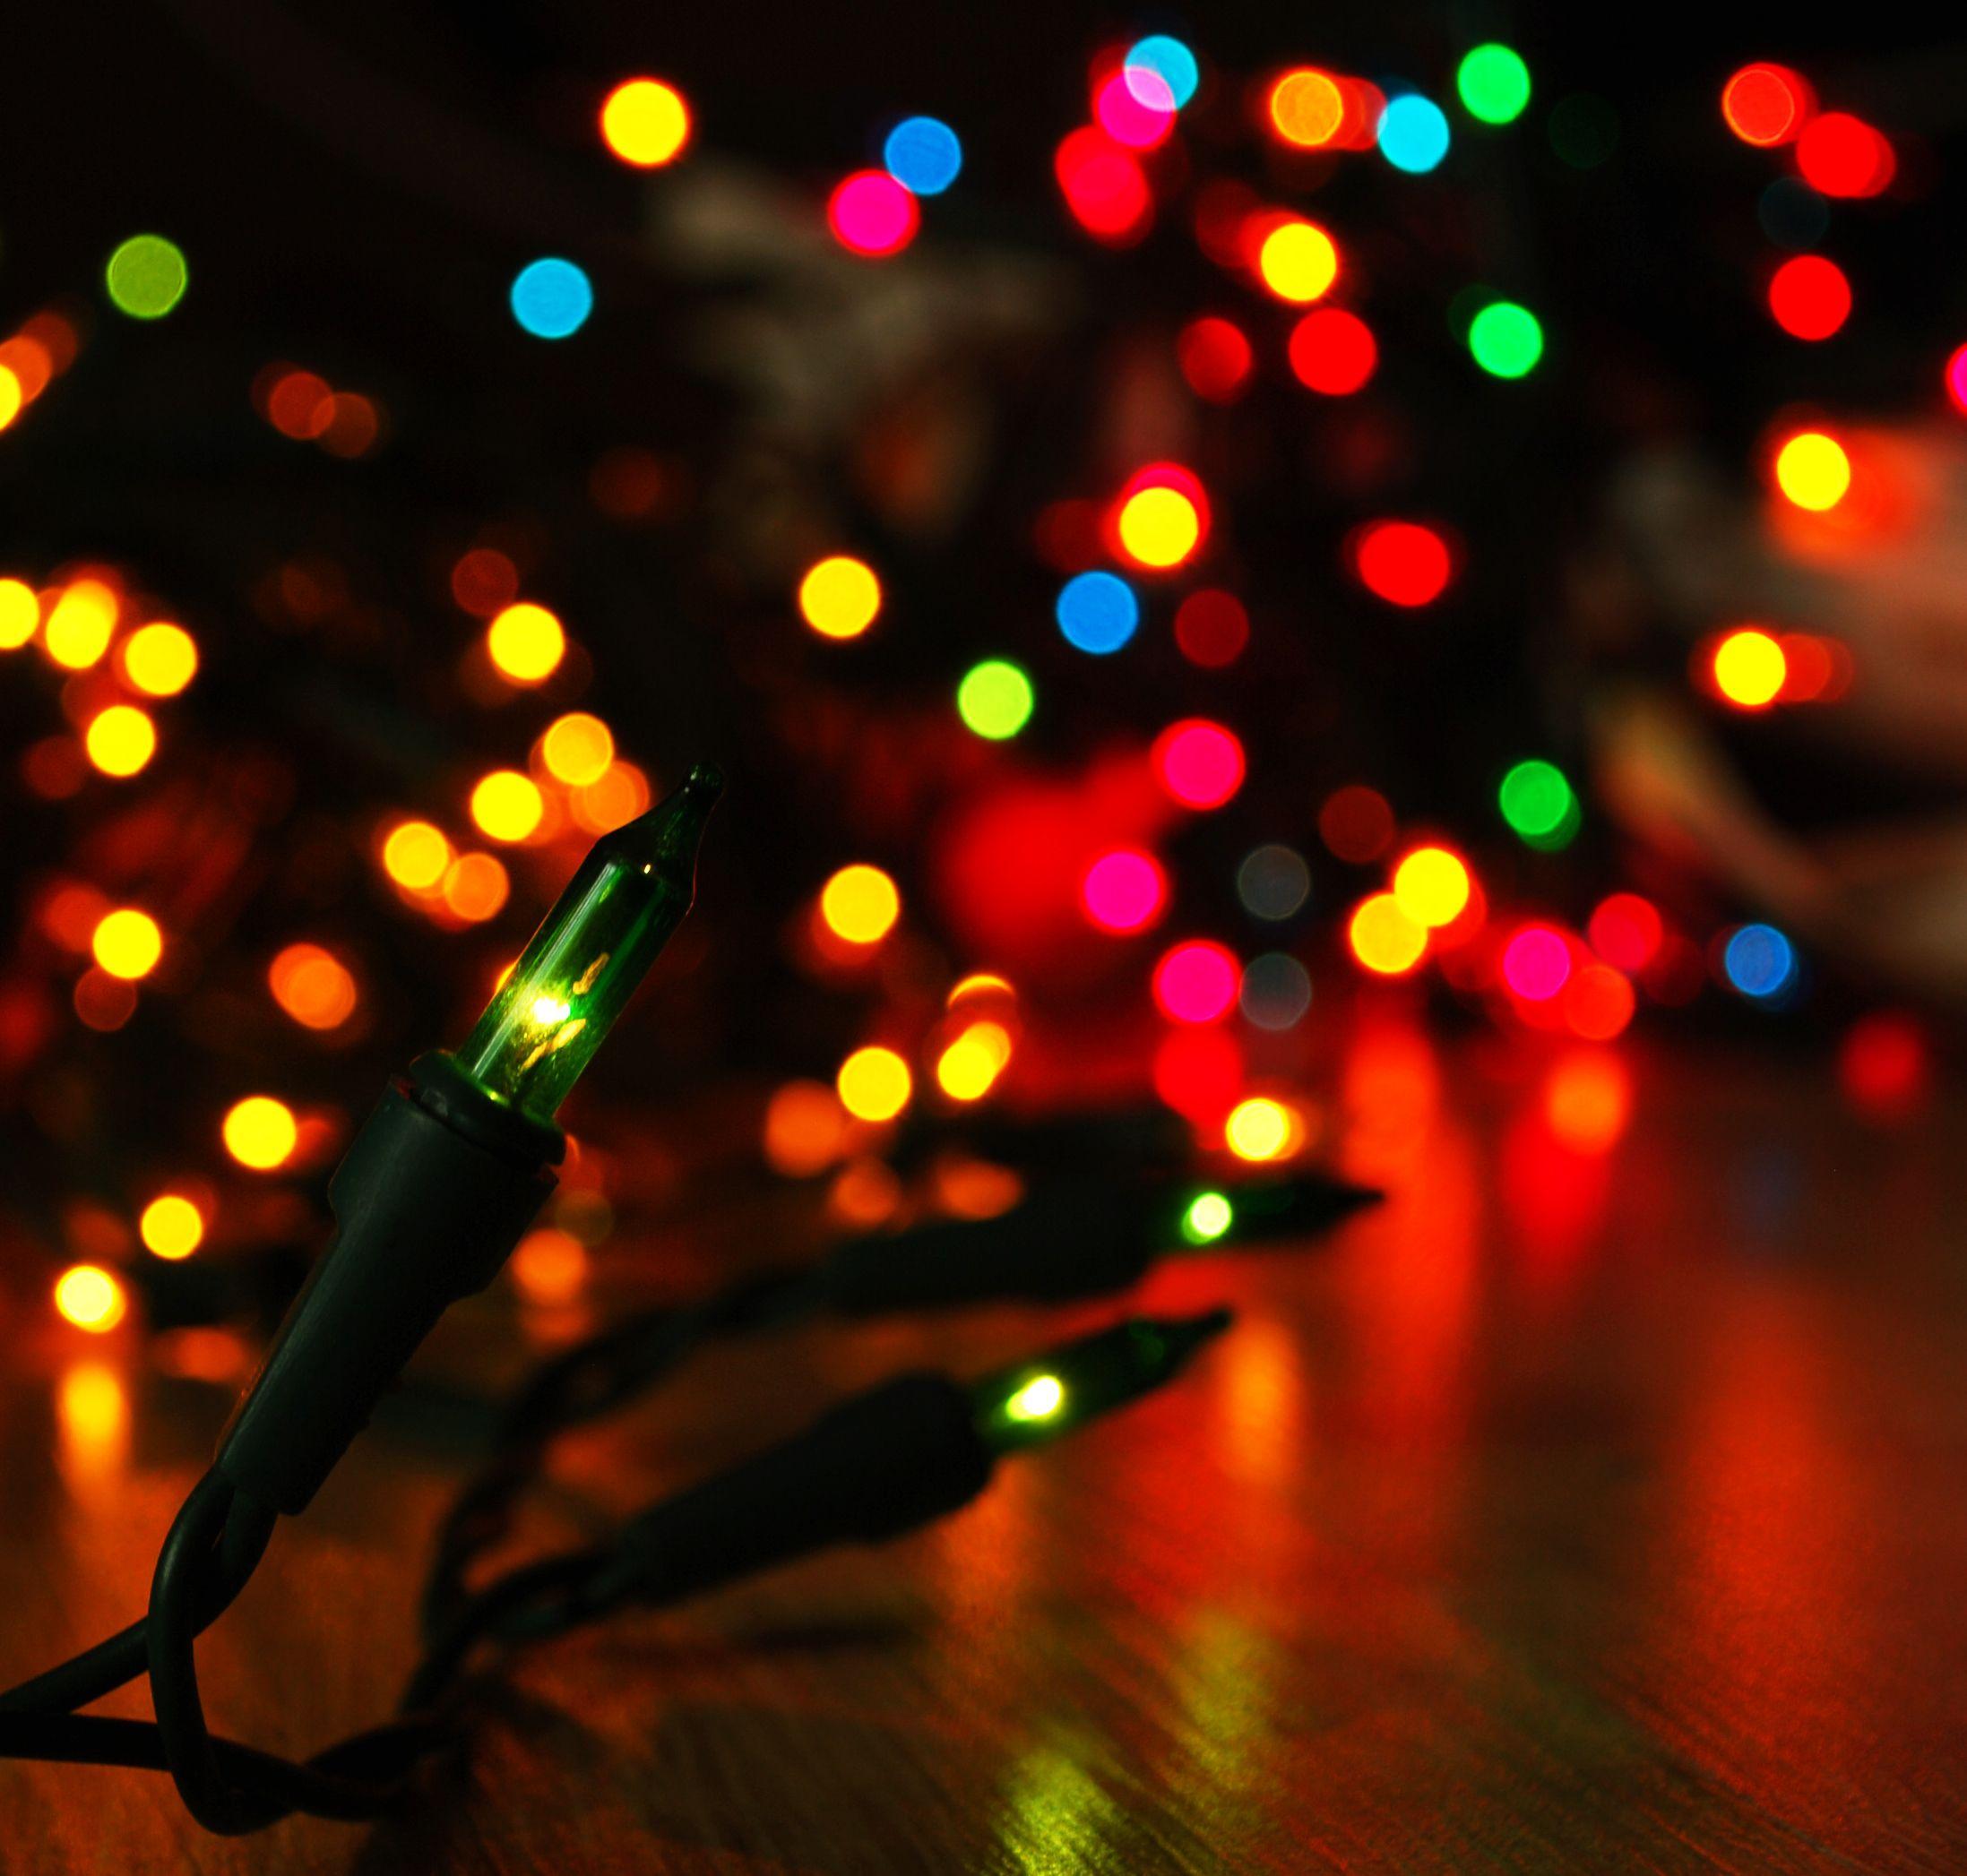 Christmas lights create a beautiful rainbow, a pleather of hues